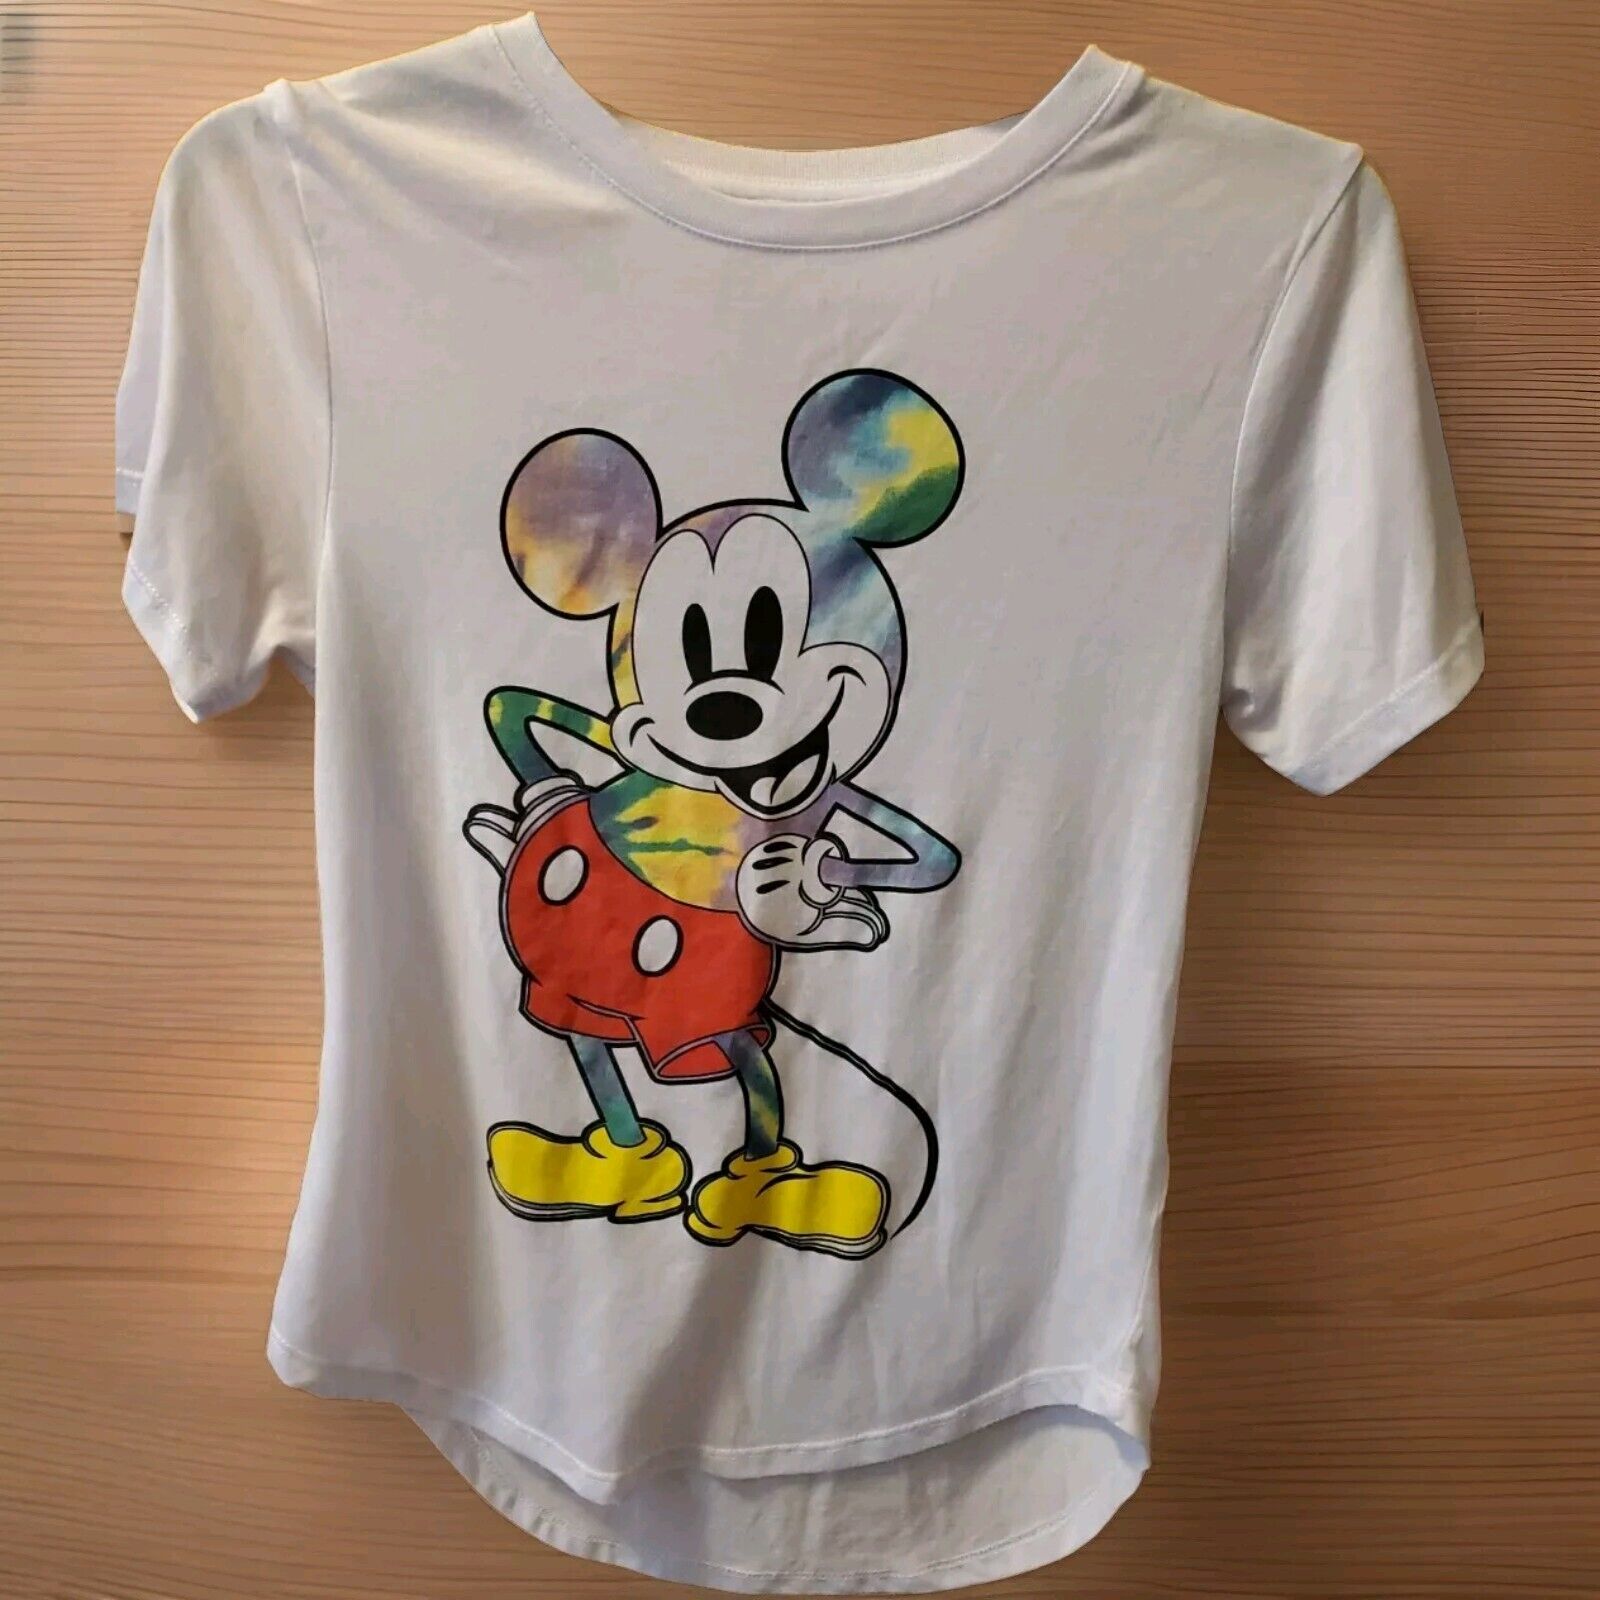 NWOT--Disney Mickey Mouse With Tye Dye Ears/body Size S (3-5) Shirt